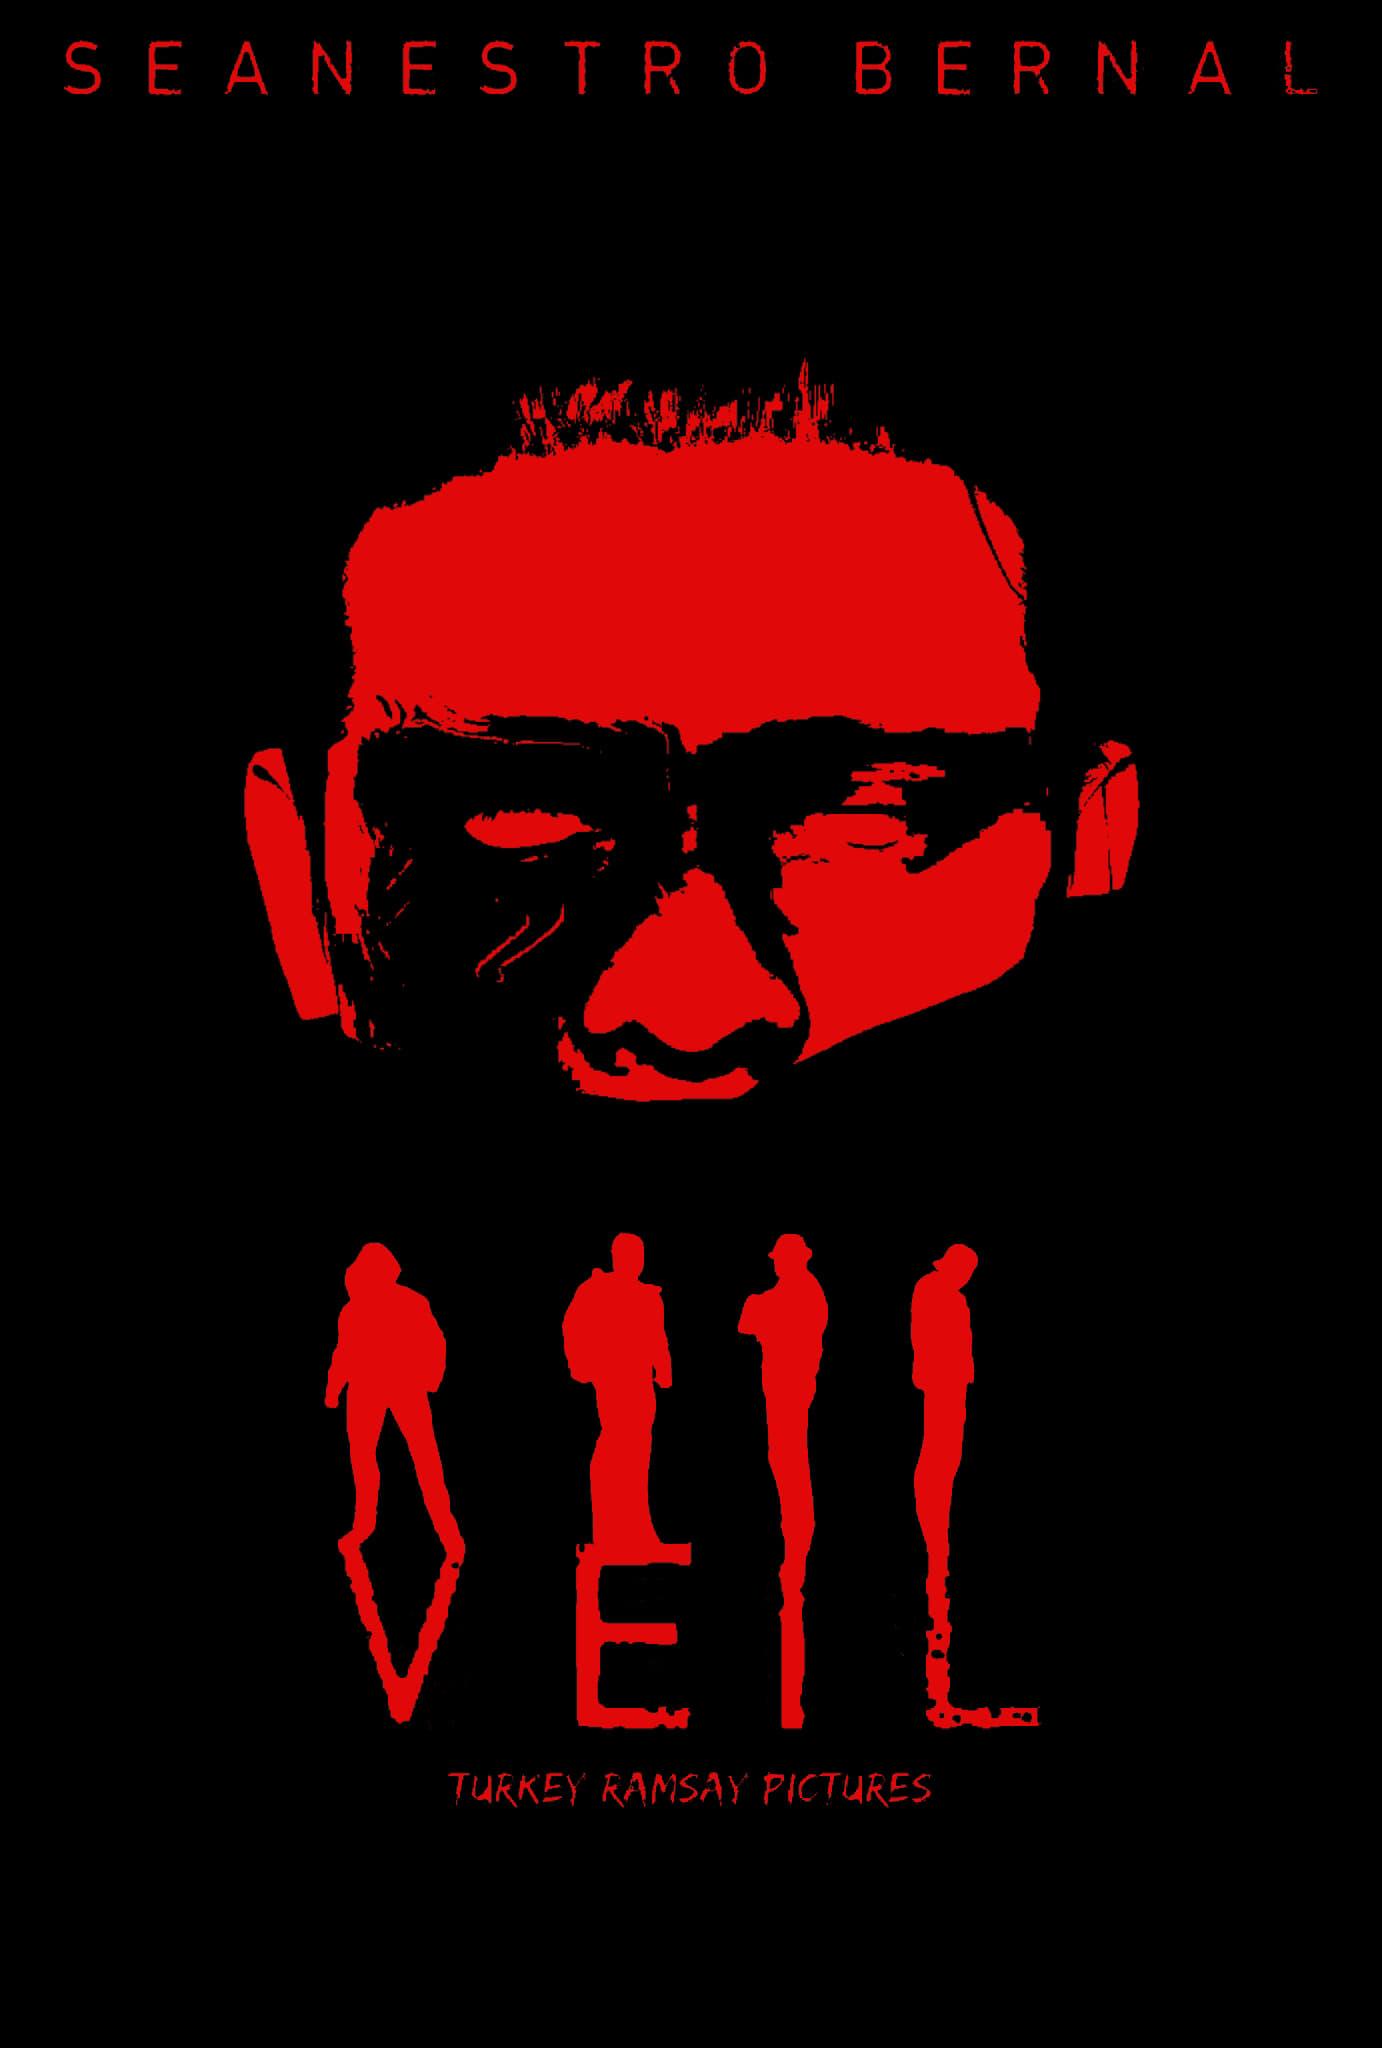 Seanestro Bernal's Veil poster